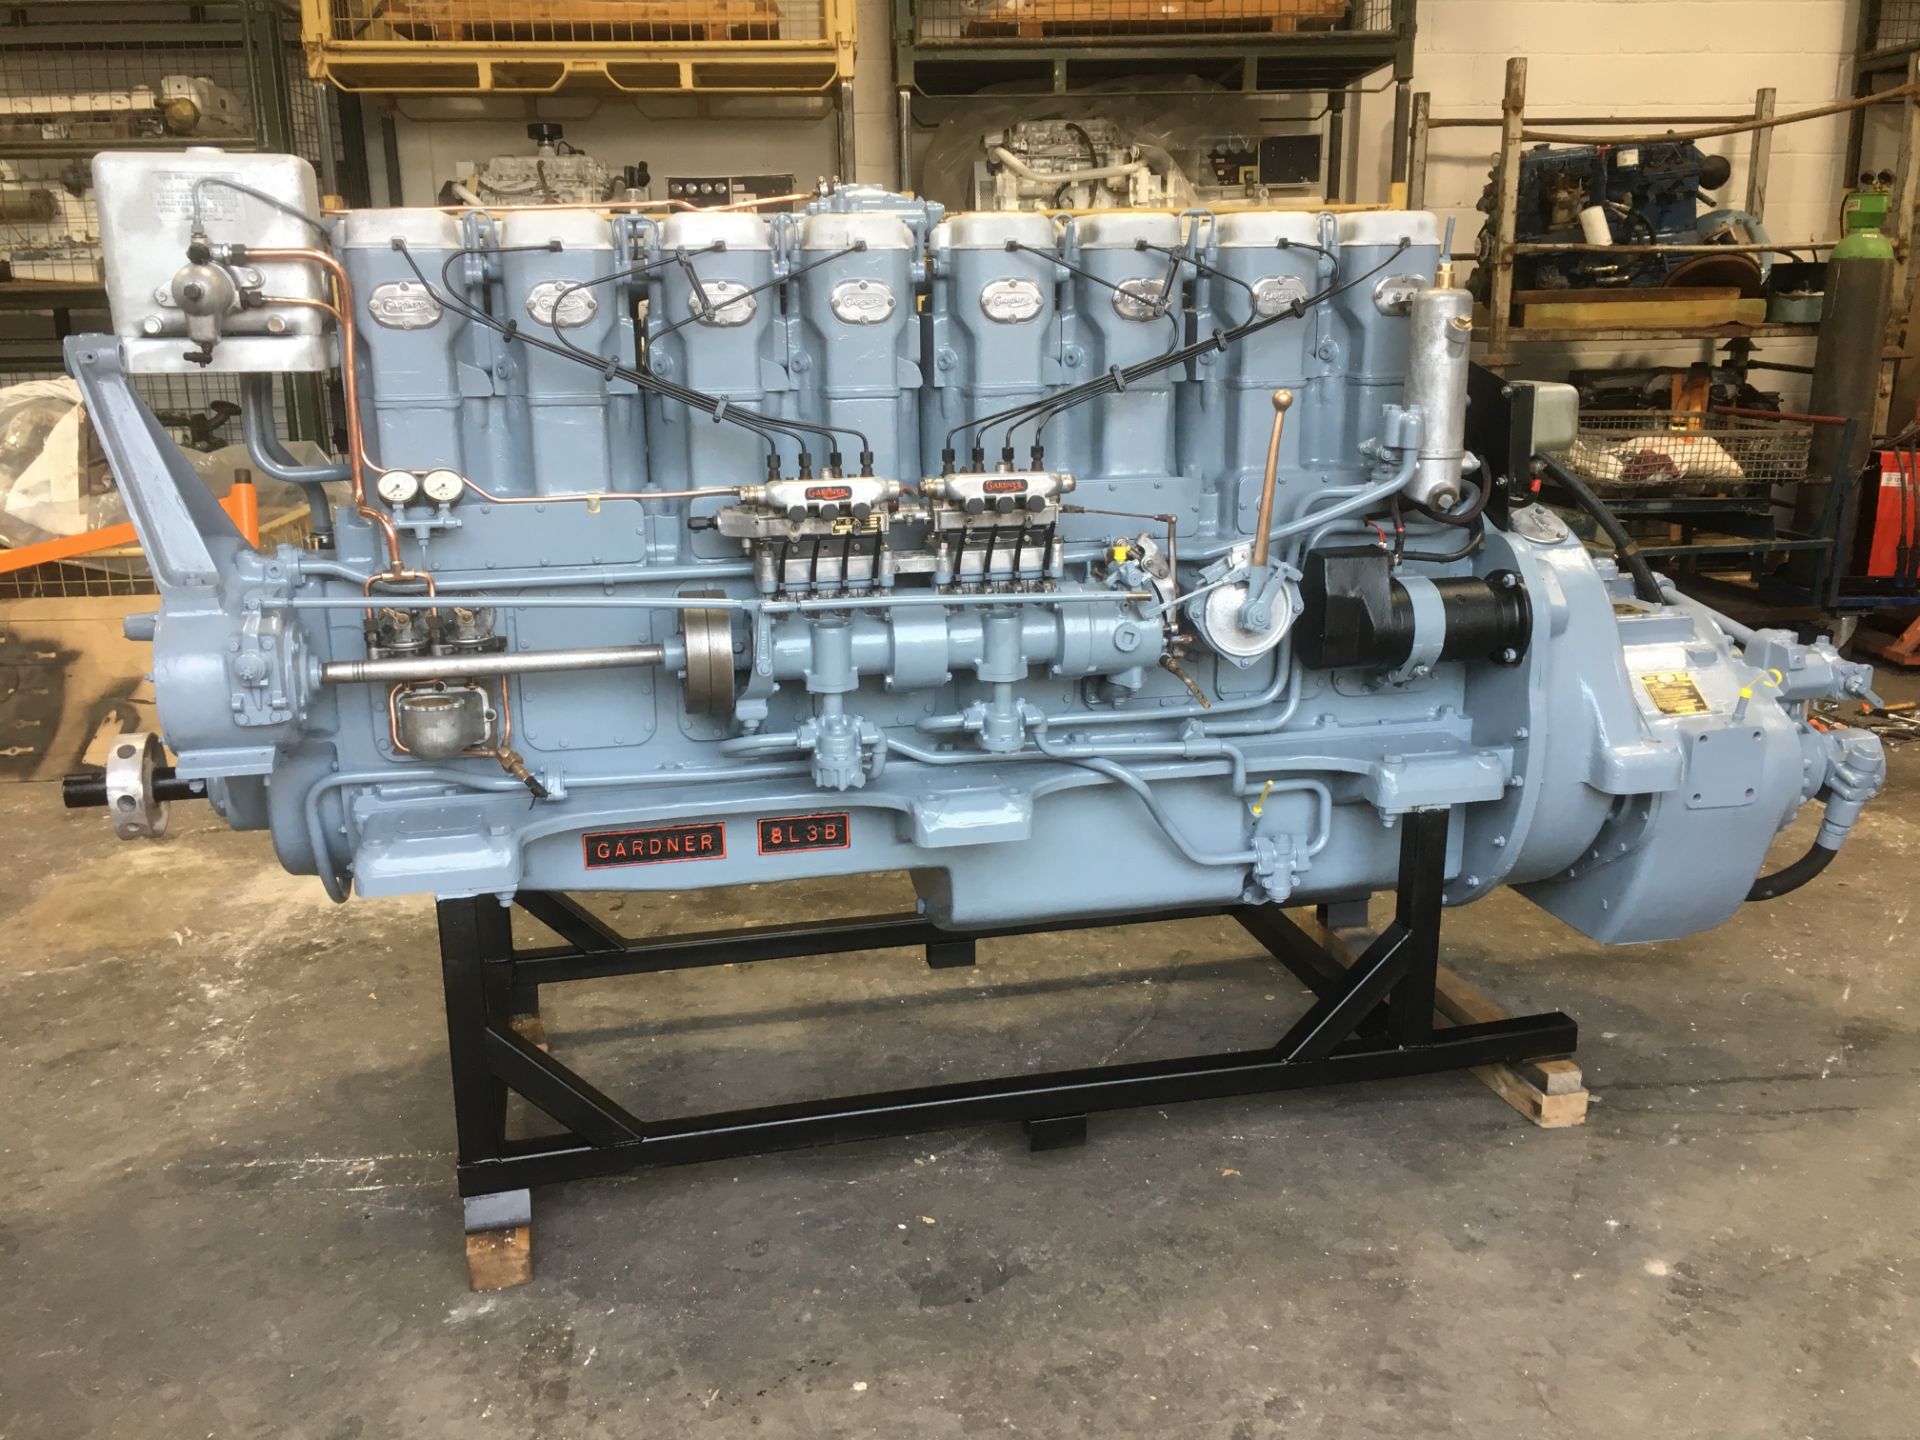 A Gardner Reconditioned Model 8L3B Marine Diesel Engine - Image 5 of 5